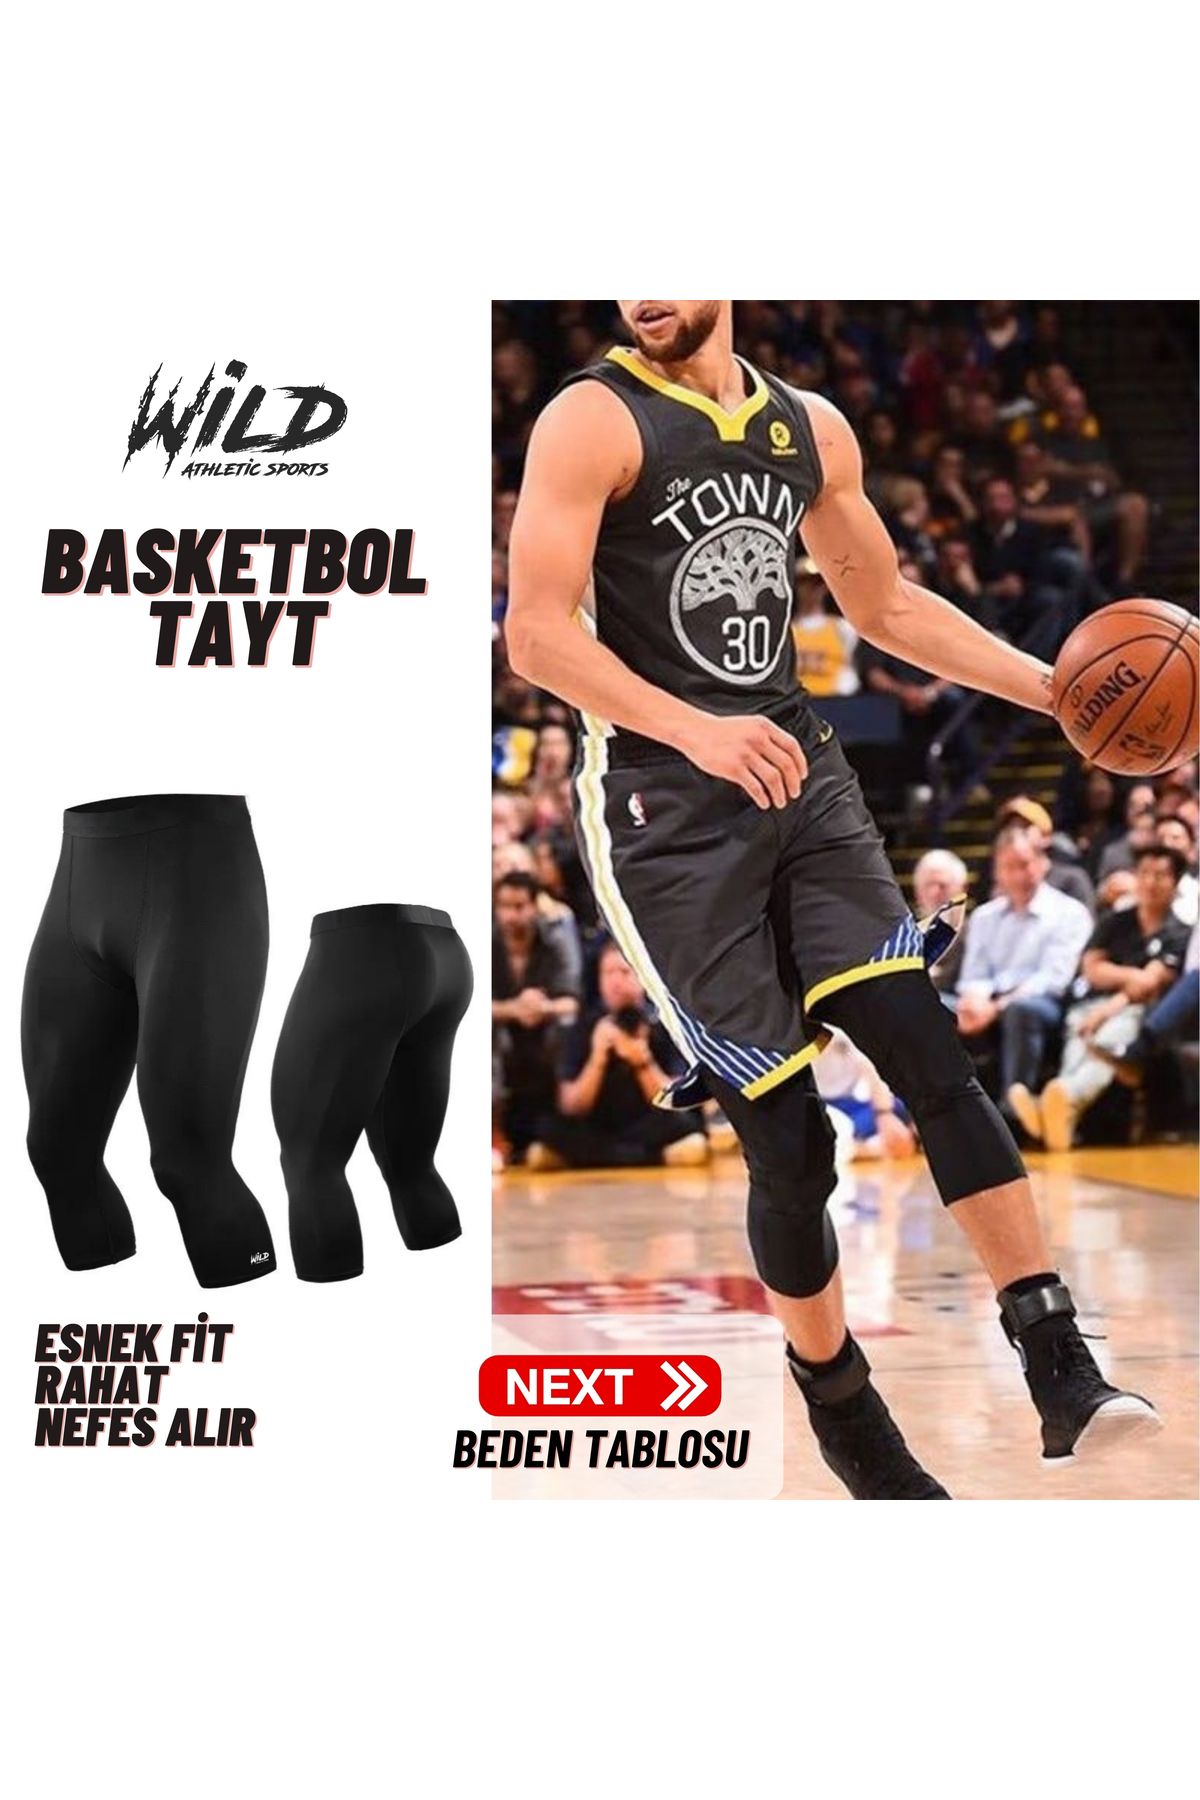 Wild Athletic Sports Basketbol 3/4 Spor Tayt